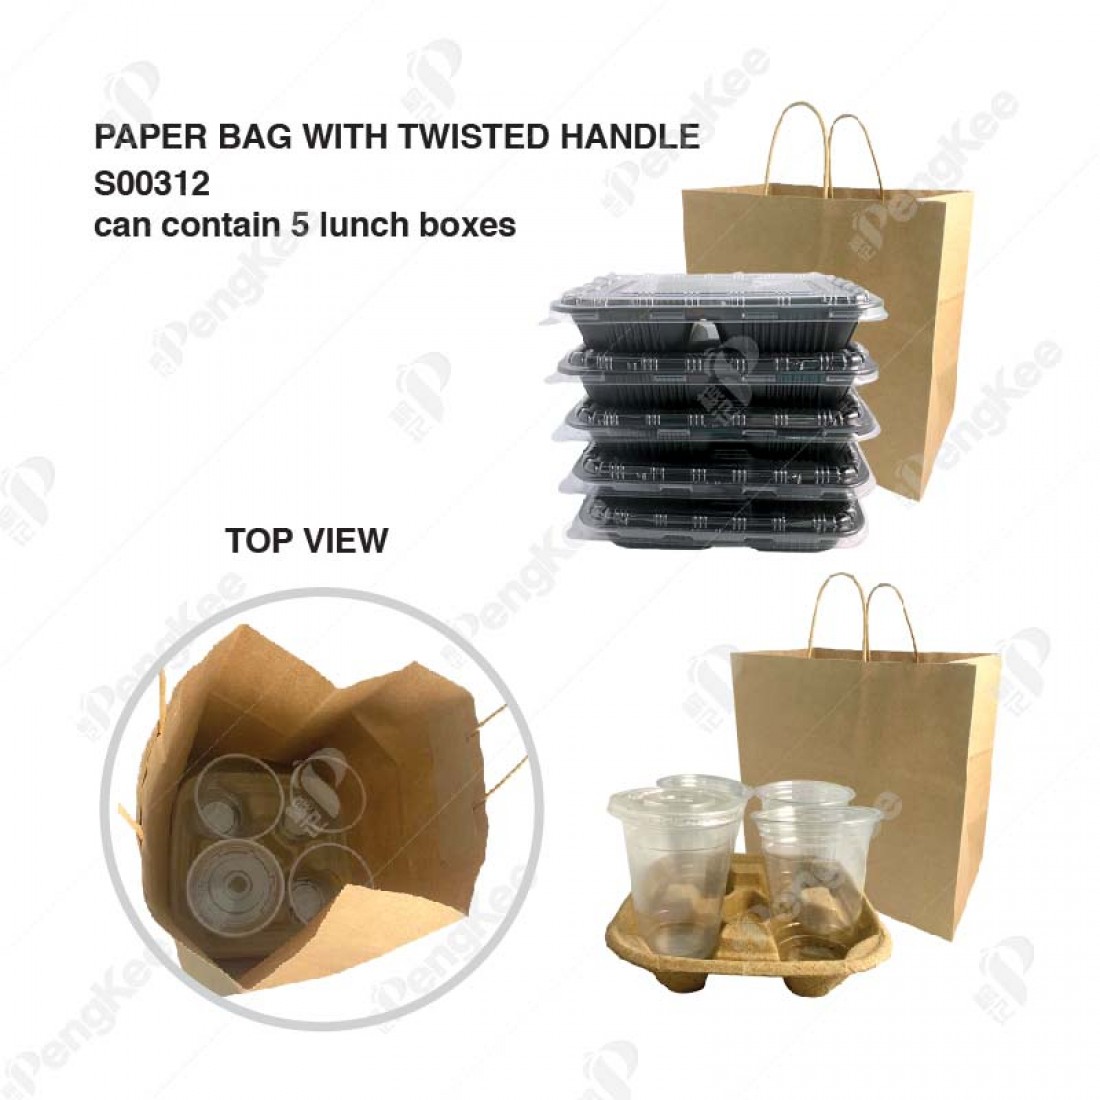 CARTON BROWN TWISTED HANDLE PAPER BAG NO.2- 28 X 28 X 15 (CM)